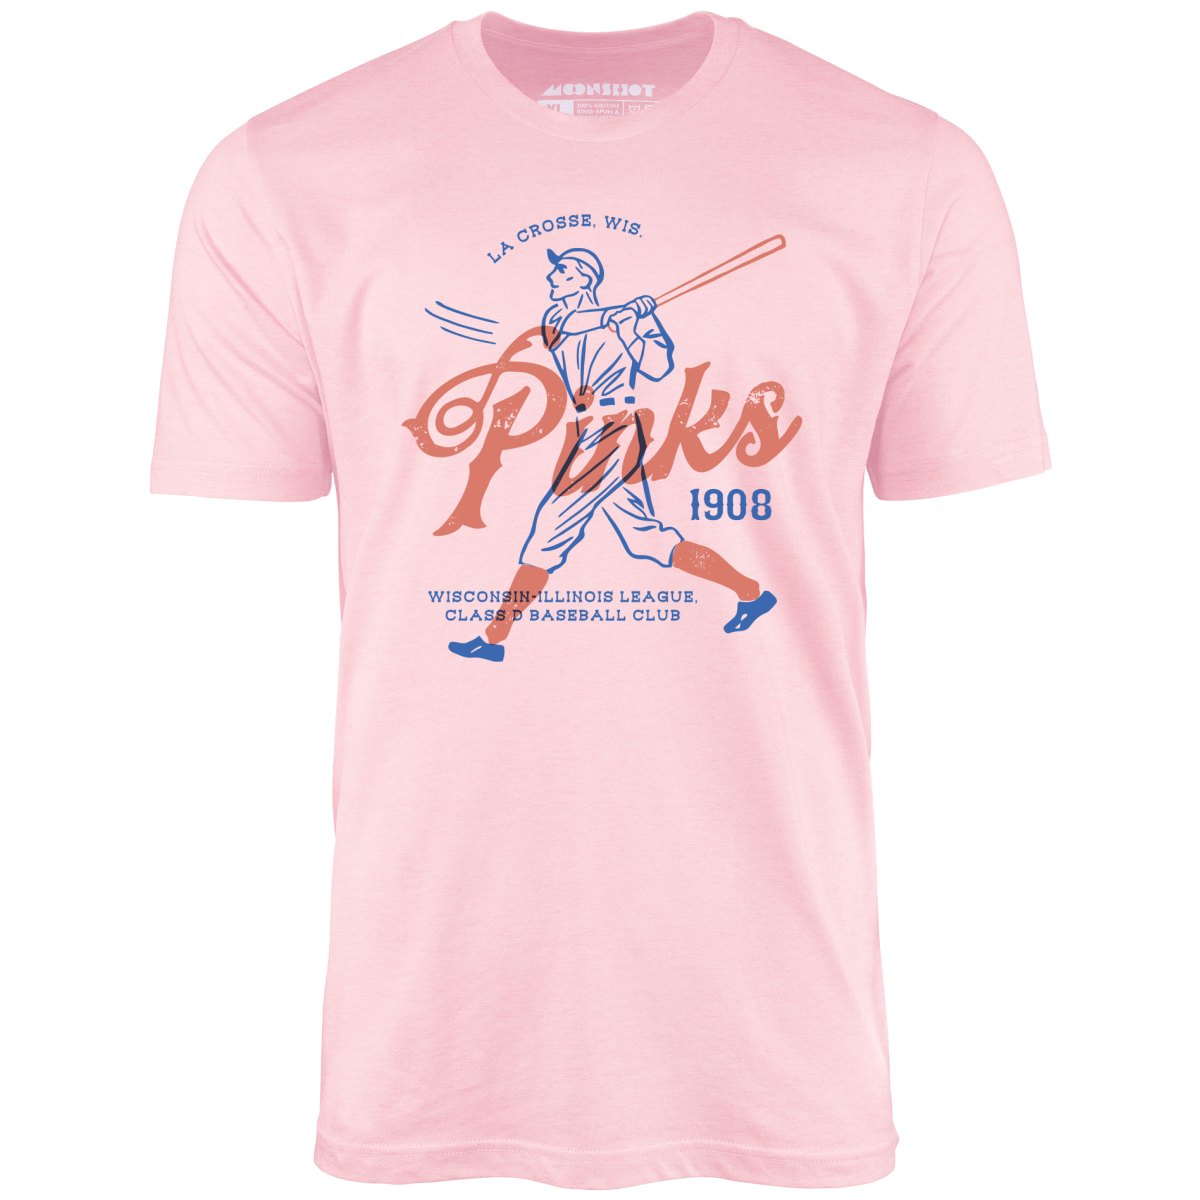 La Crosse Pinks - Wisconsin - Vintage Defunct Baseball Teams - Unisex T-Shirt